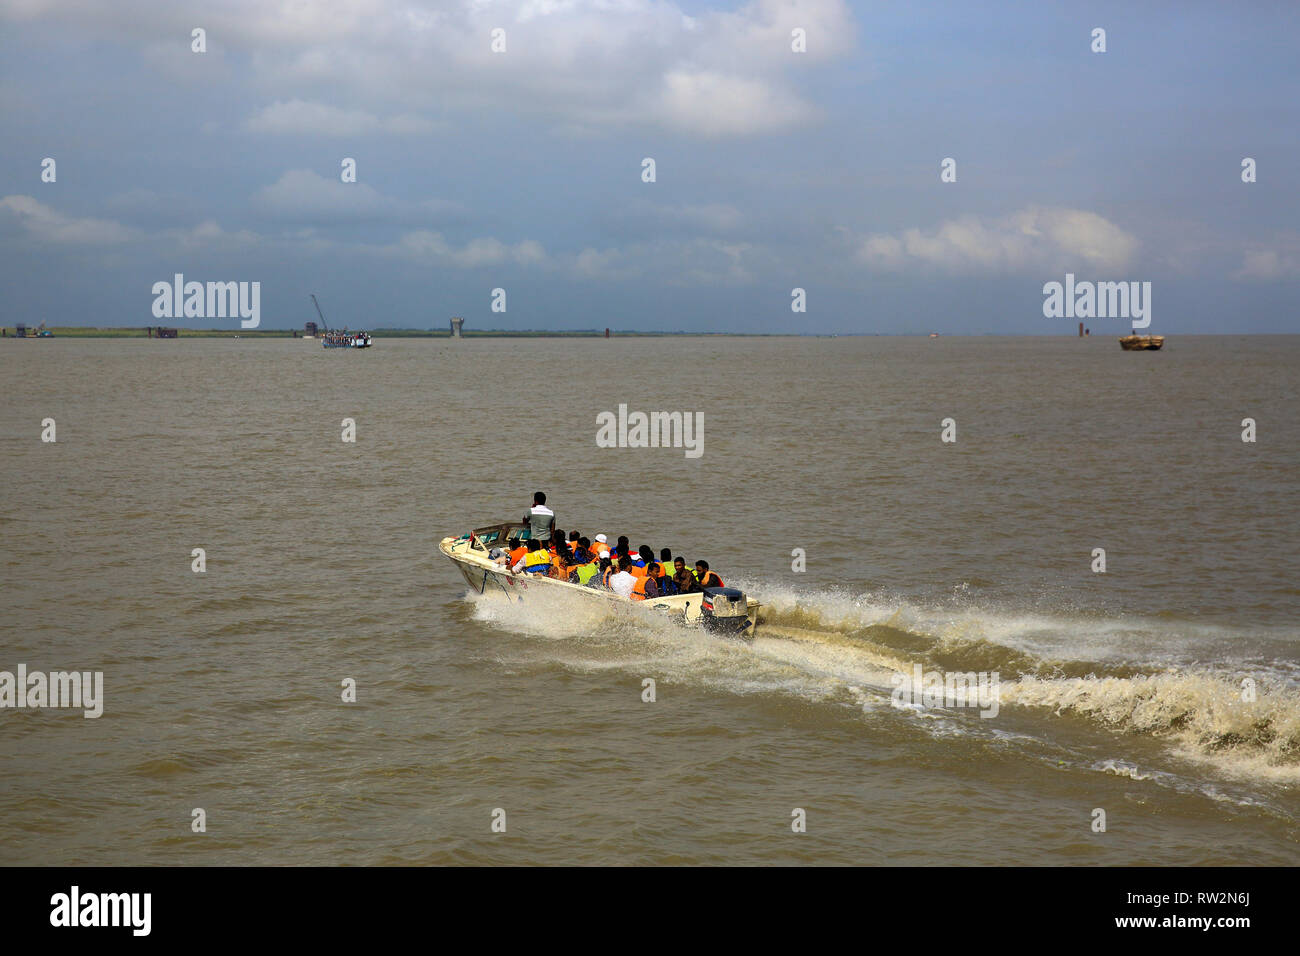 People cross the Padma River on speedboats on the Maowa-Kaorhakandi route. Munshiganj, Bangladesh Stock Photo